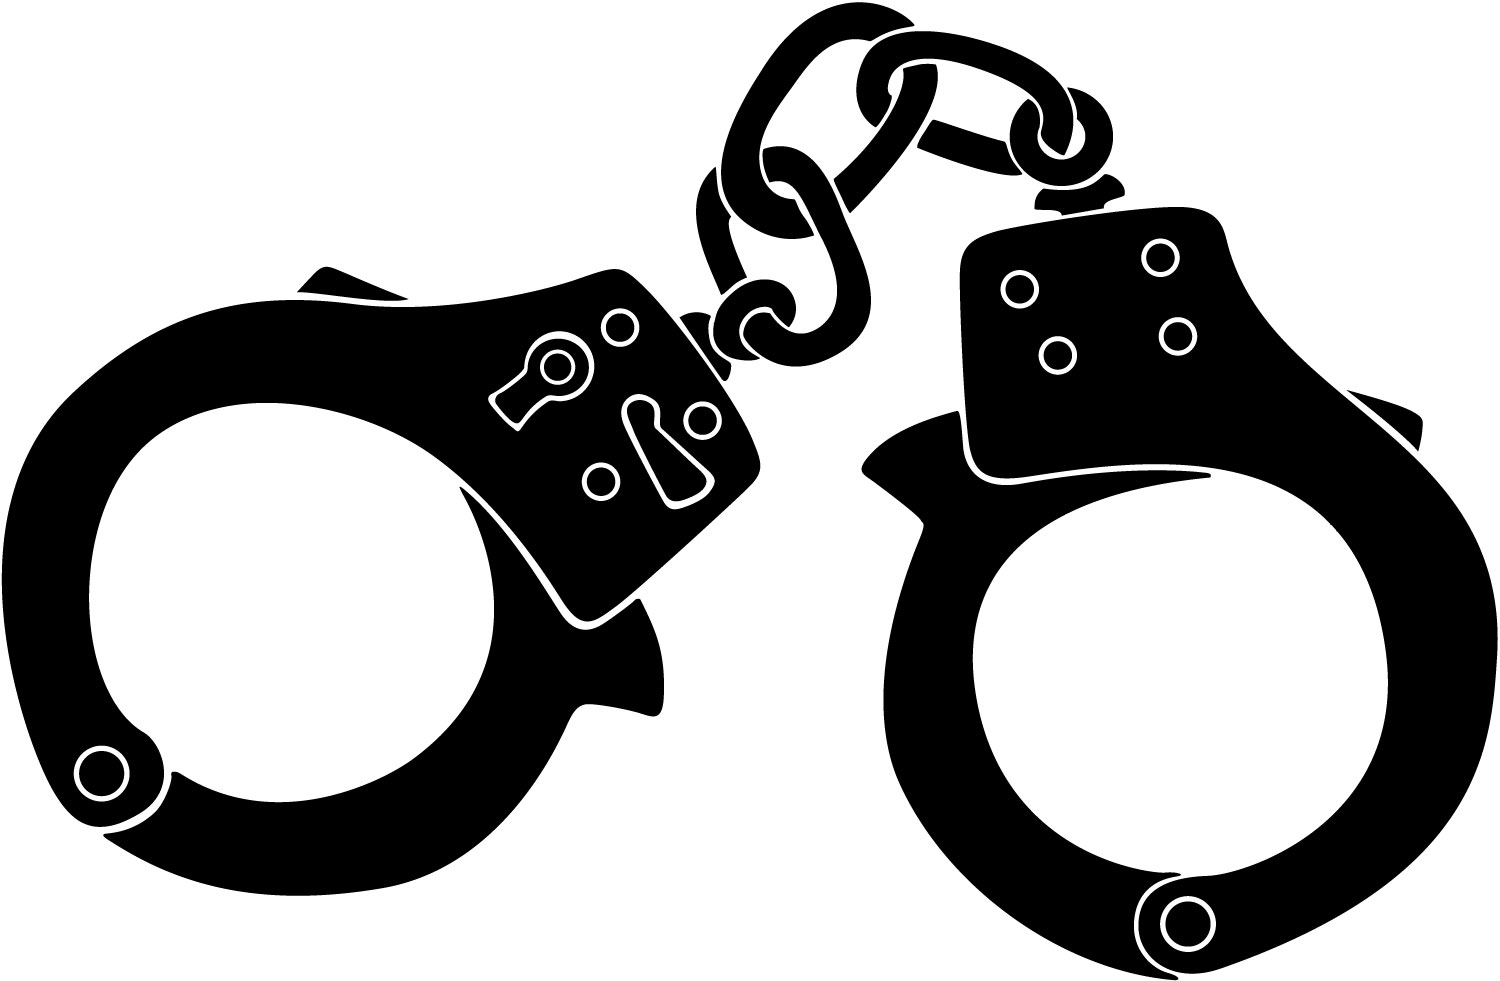 Handcuff clipart cuffed hand. Free pic of handcuffs